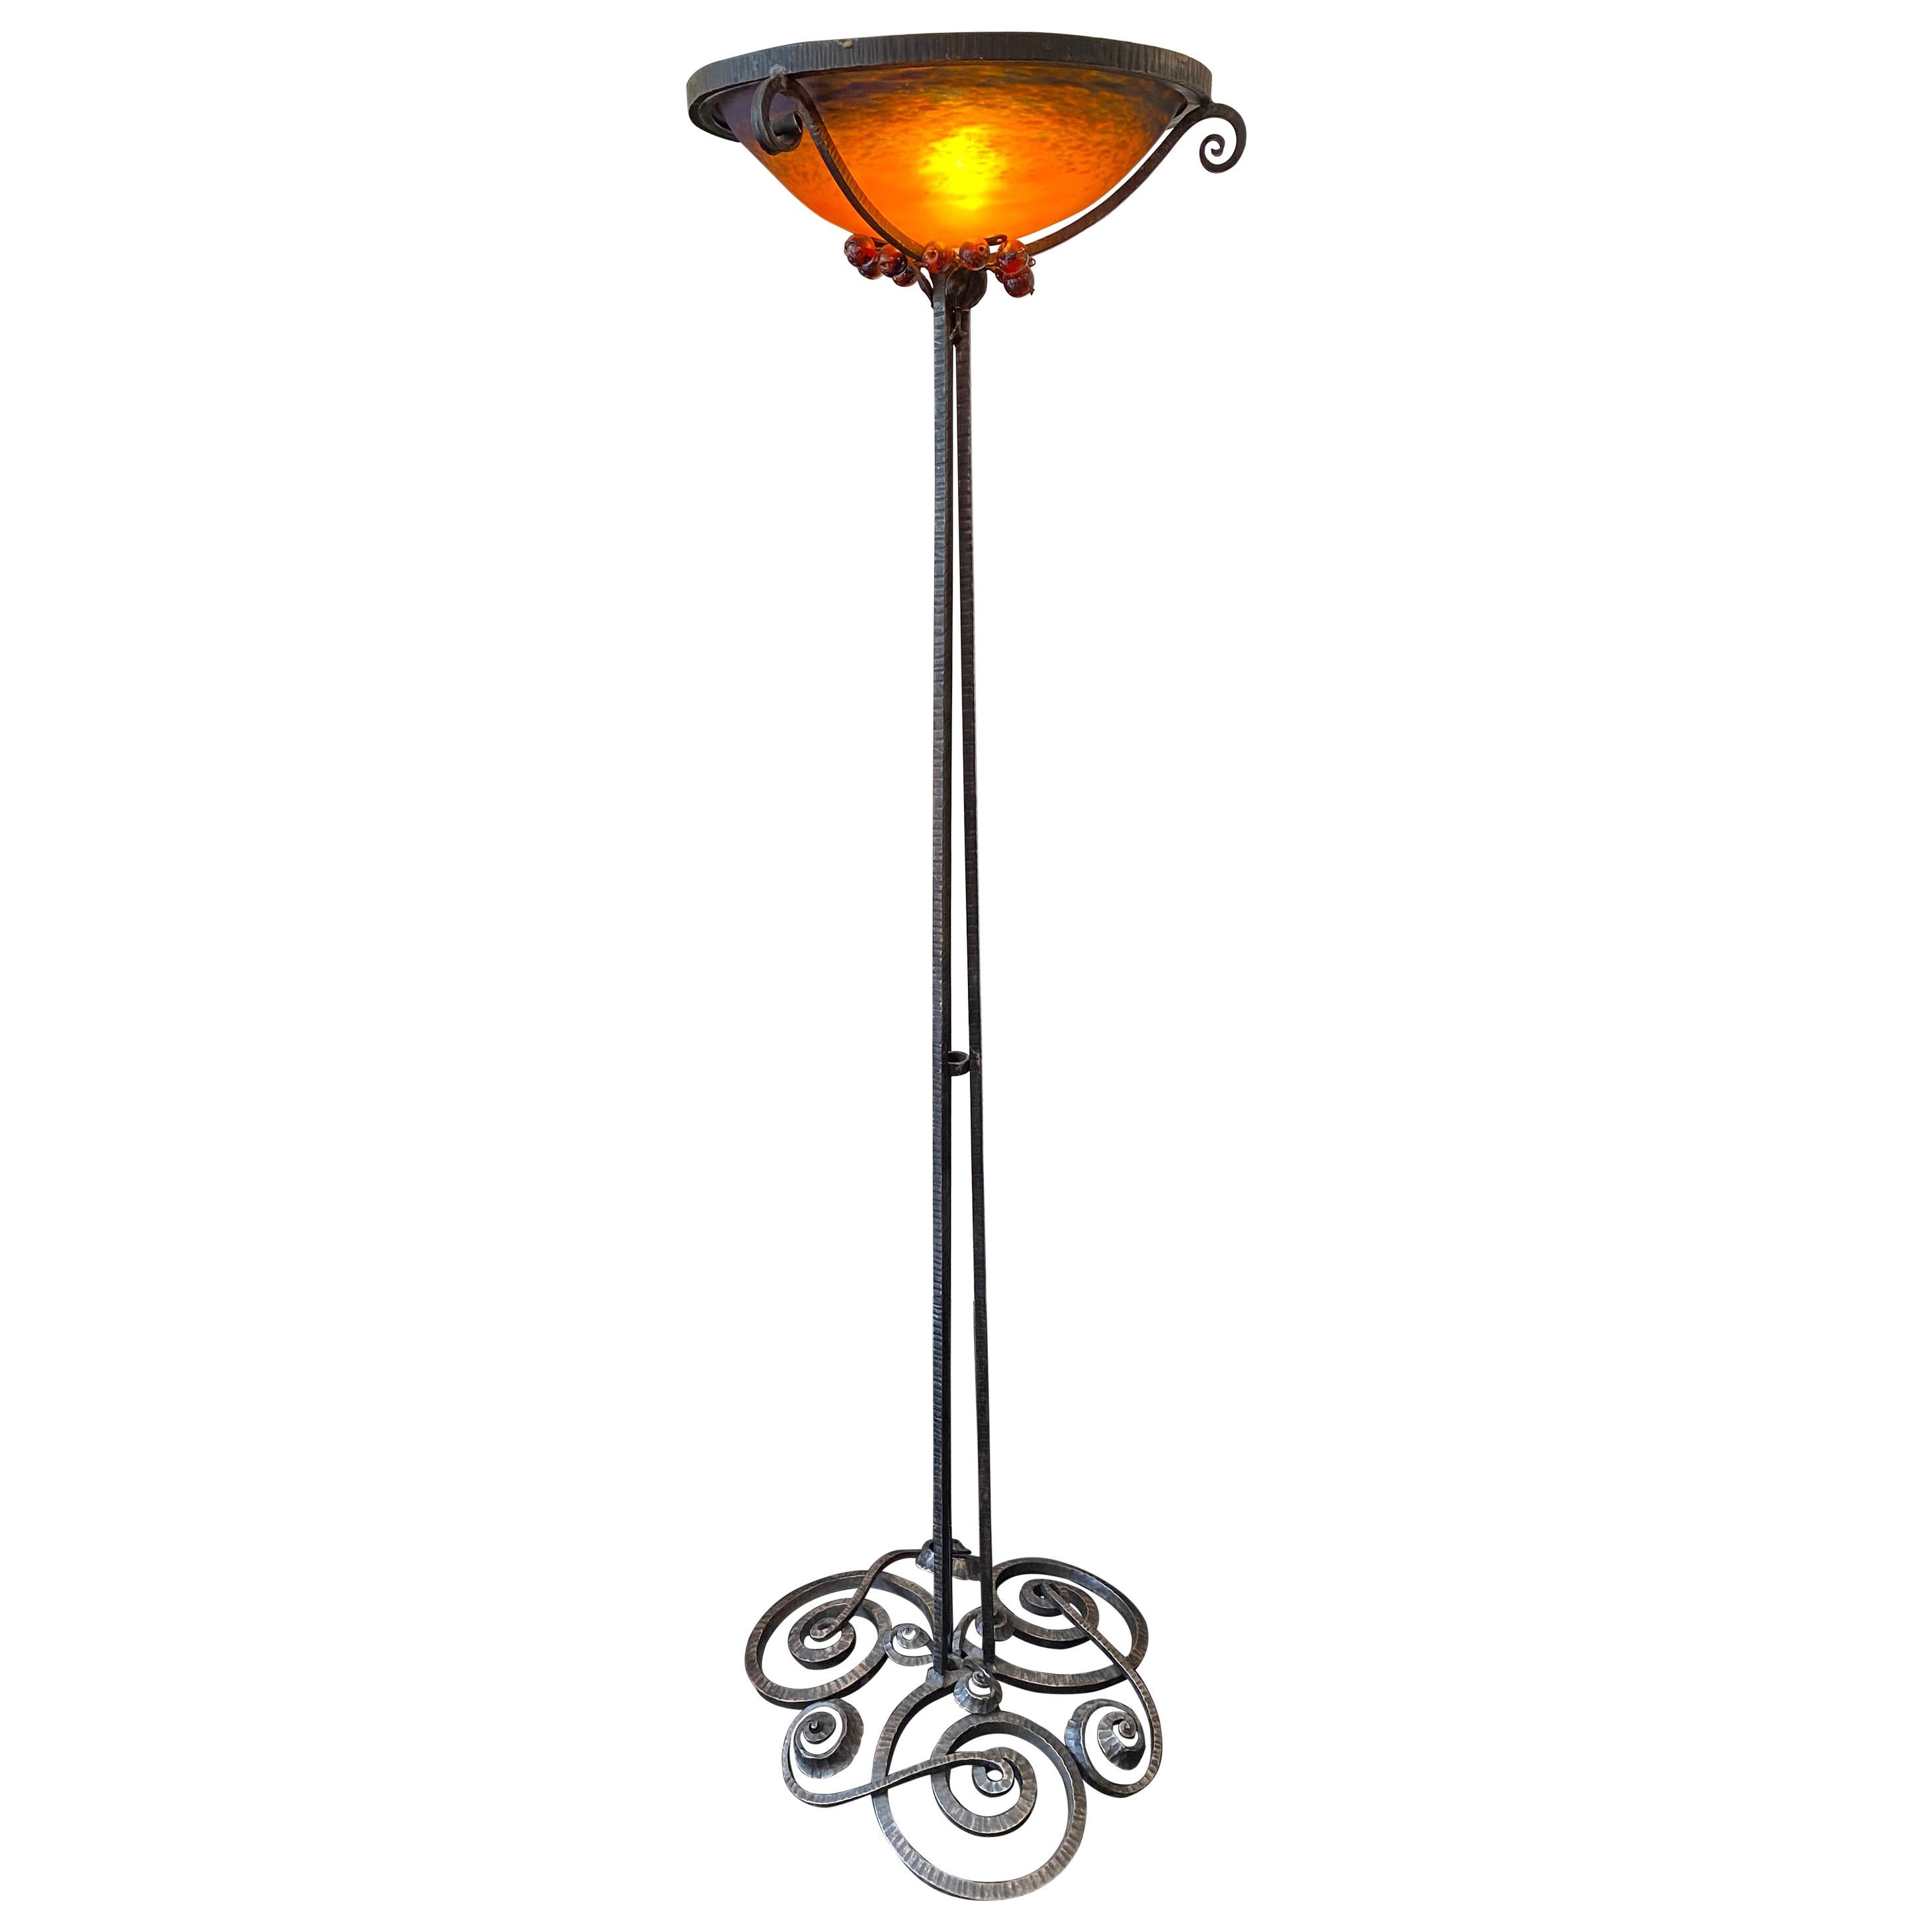 Jules Cayette & Charles Schneider Art Nouveau Wrought Iron Floor Lamp For Sale